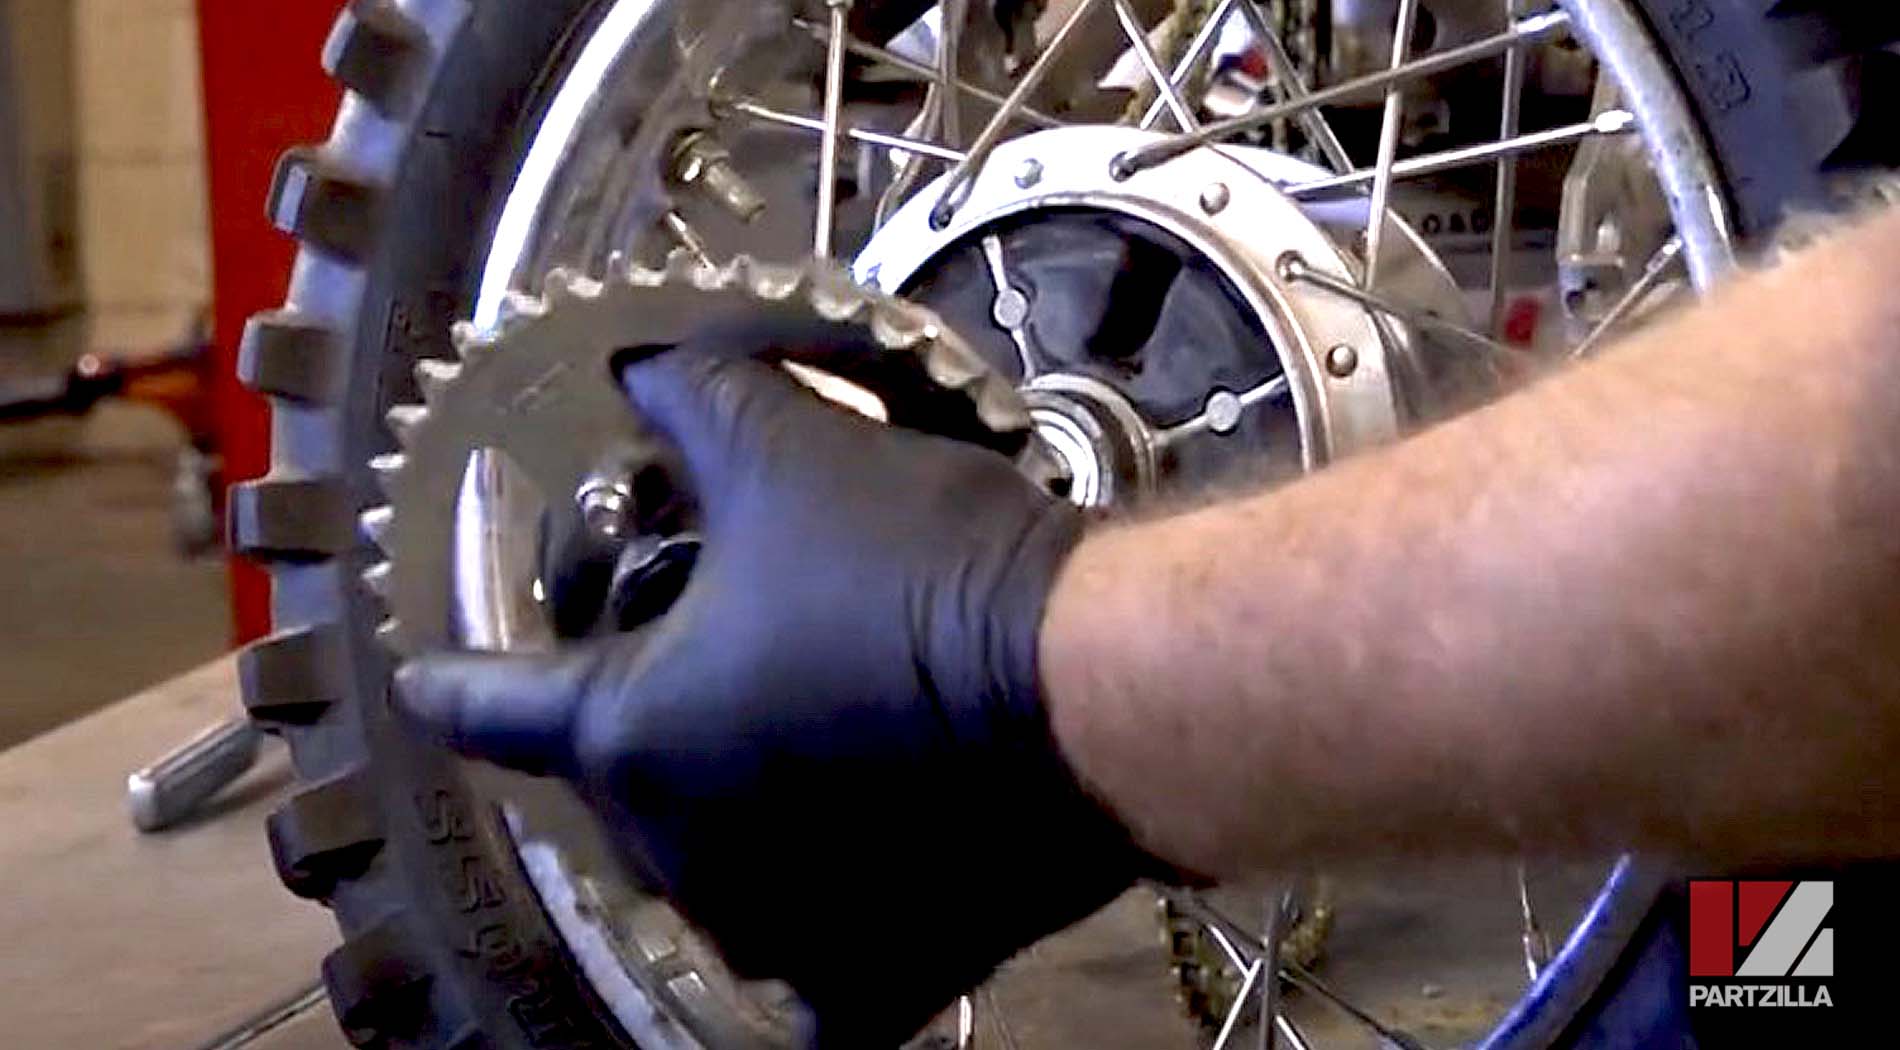 Kawasaki KLX110 dirt bike rear tire removal sprocket